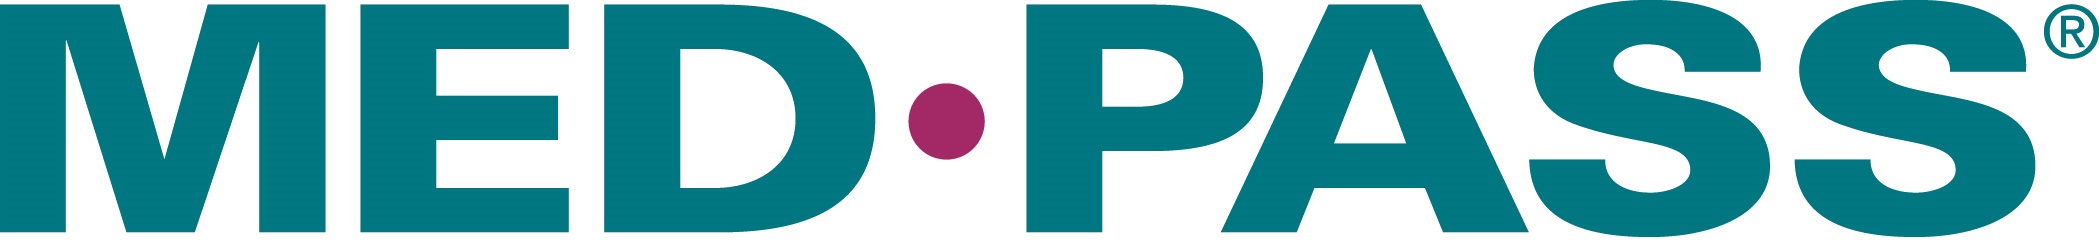 Med-pass-logo (1)